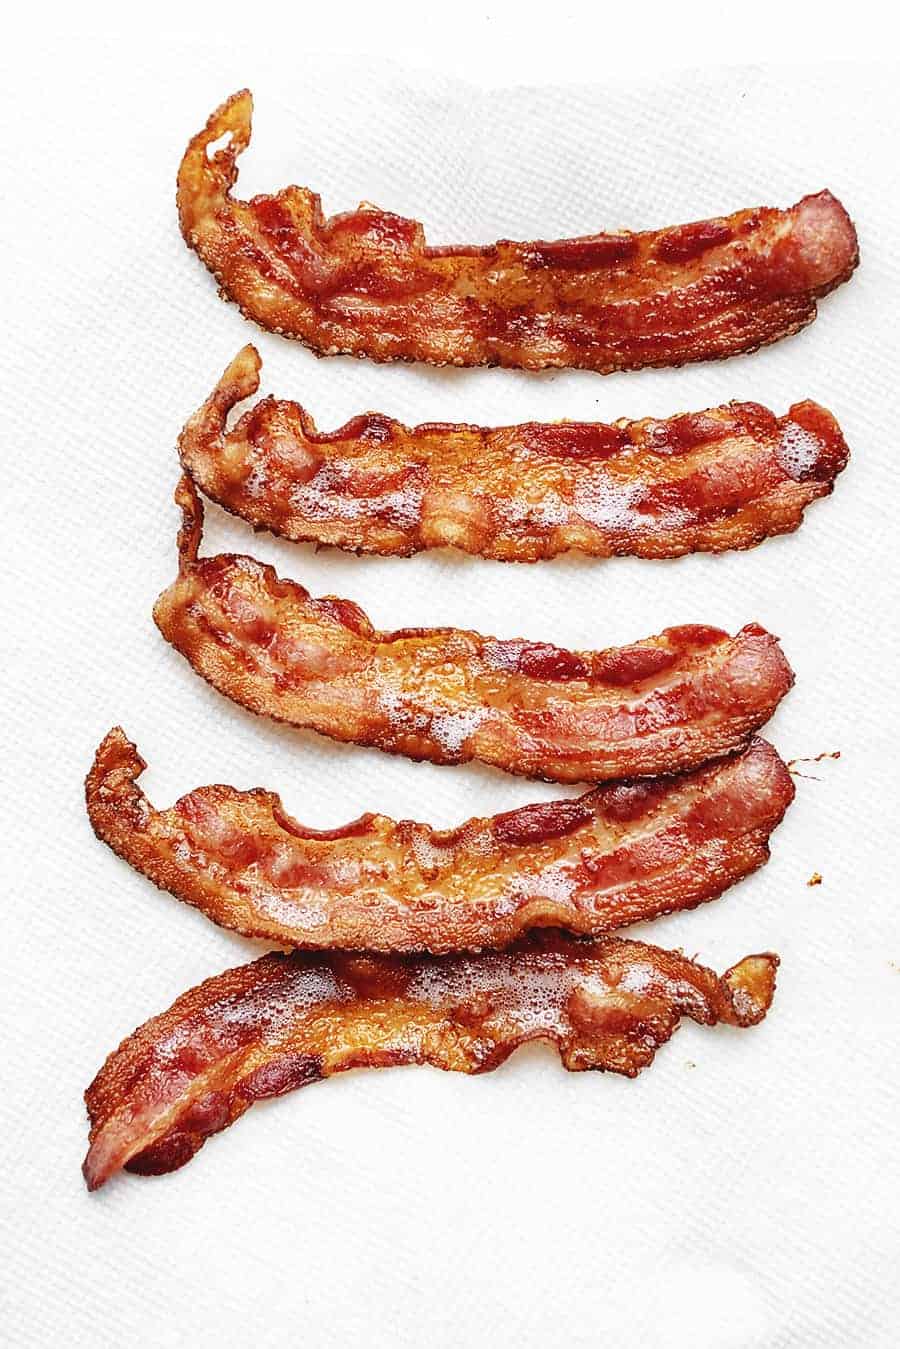 https://jenniferbanz.com/wp-content/uploads/2019/05/baked-bacon.jpg